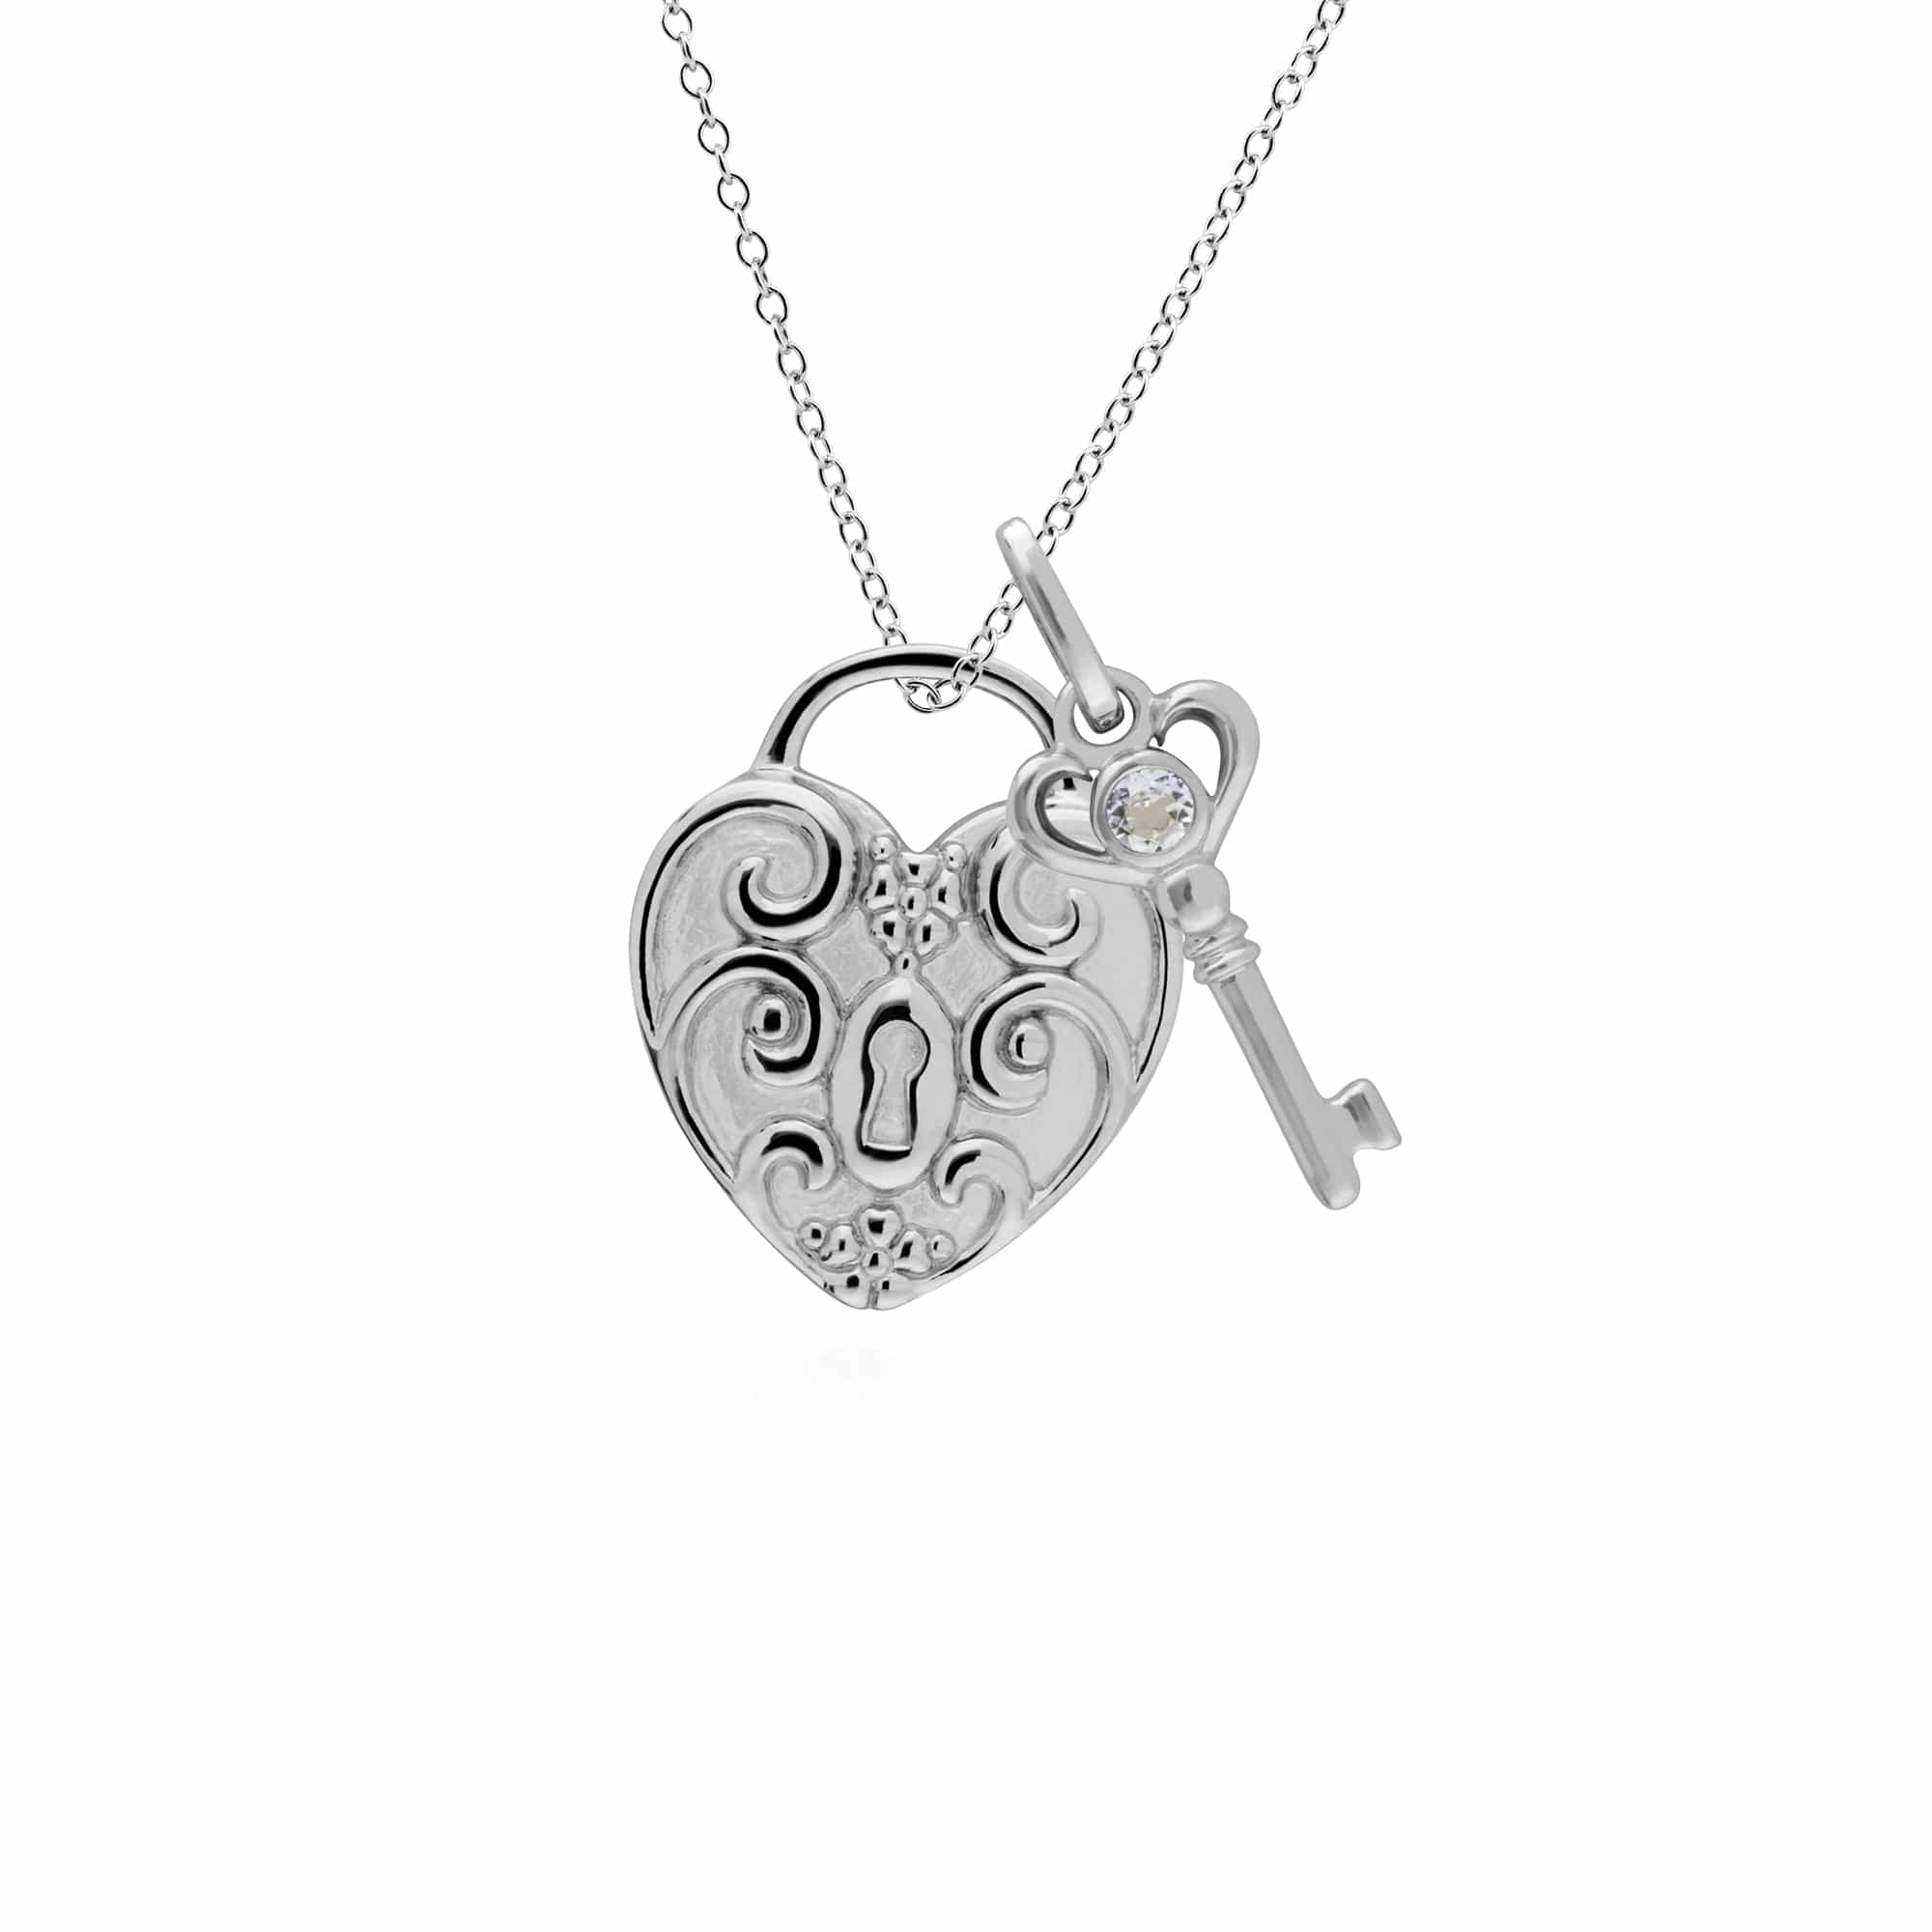 270P026409925-270P026601925 Classic Swirl Heart Lock Pendant & Clear Topaz Key Charm in 925 Sterling Silver 1